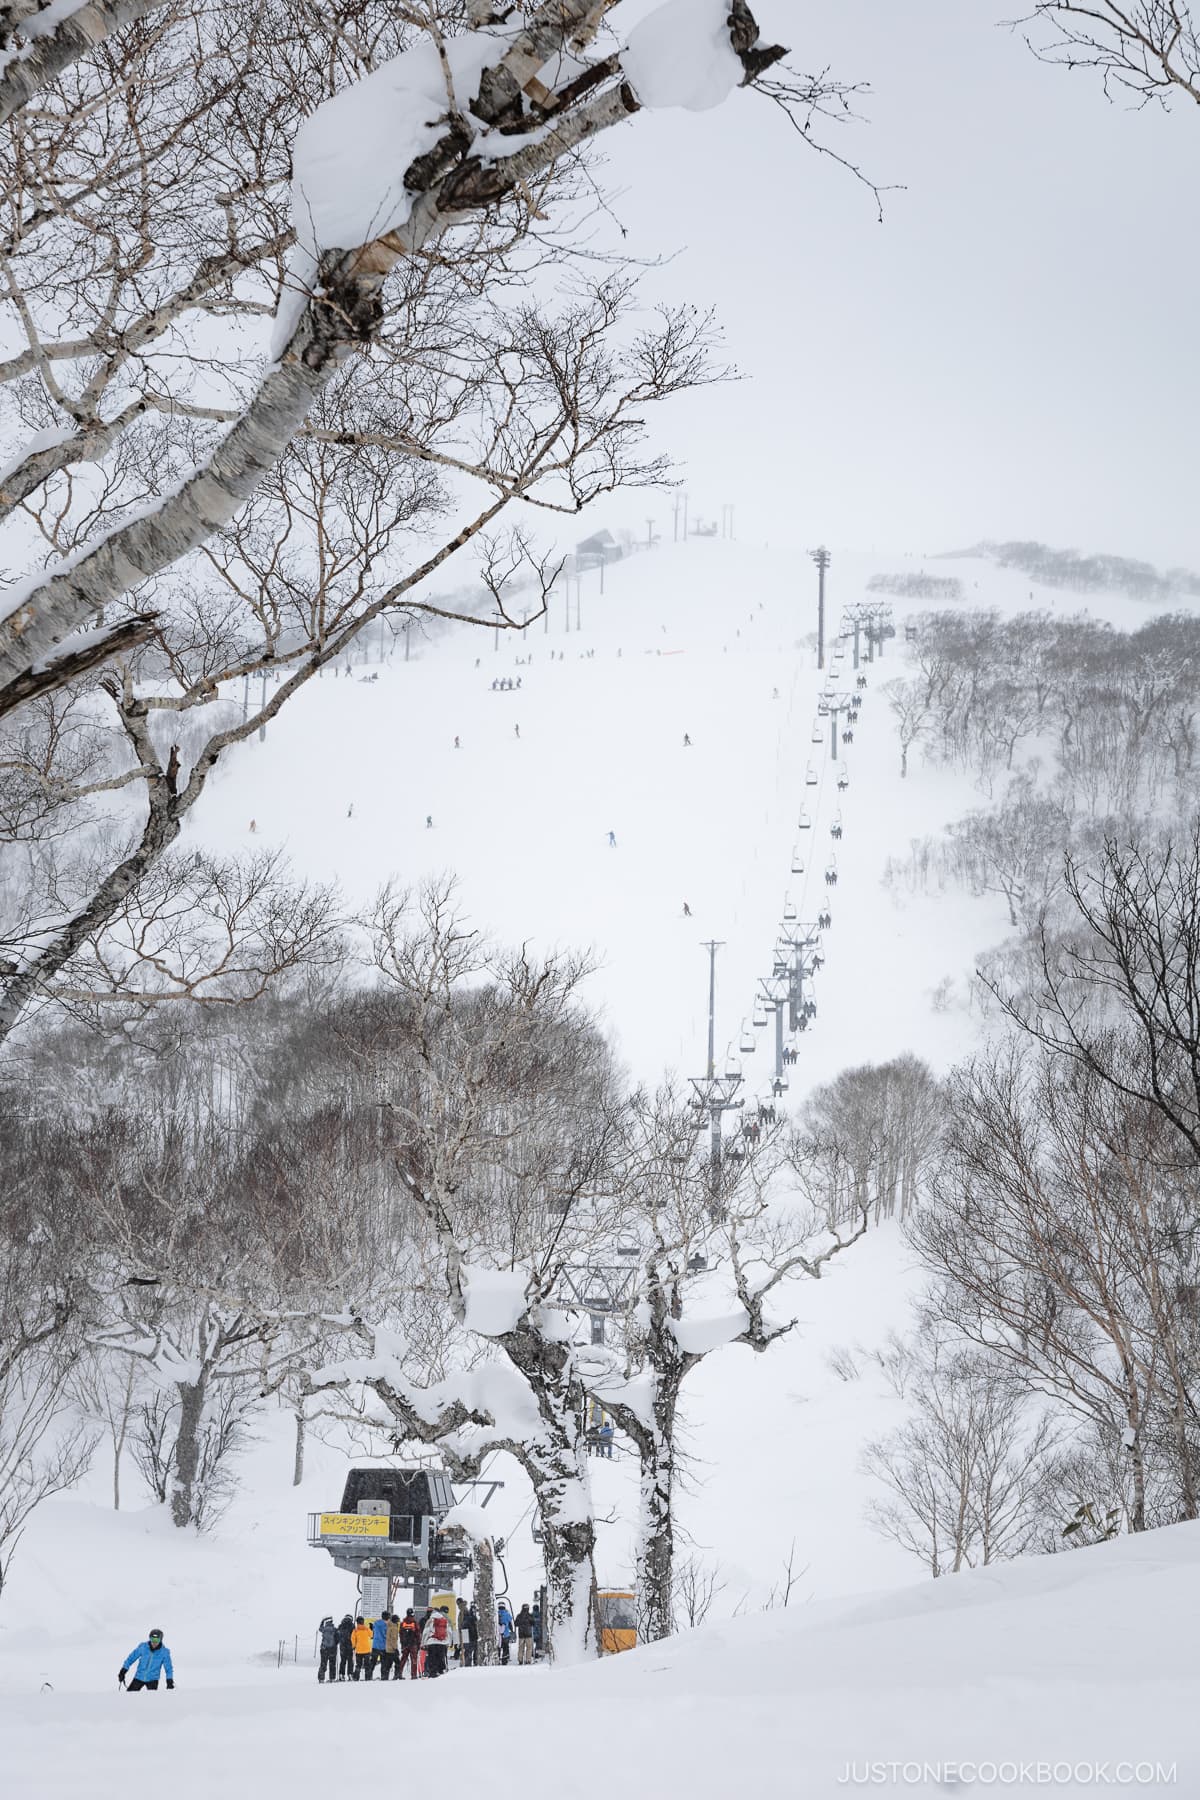 Ski Lift up to the top of mt Niseko-Annupuri